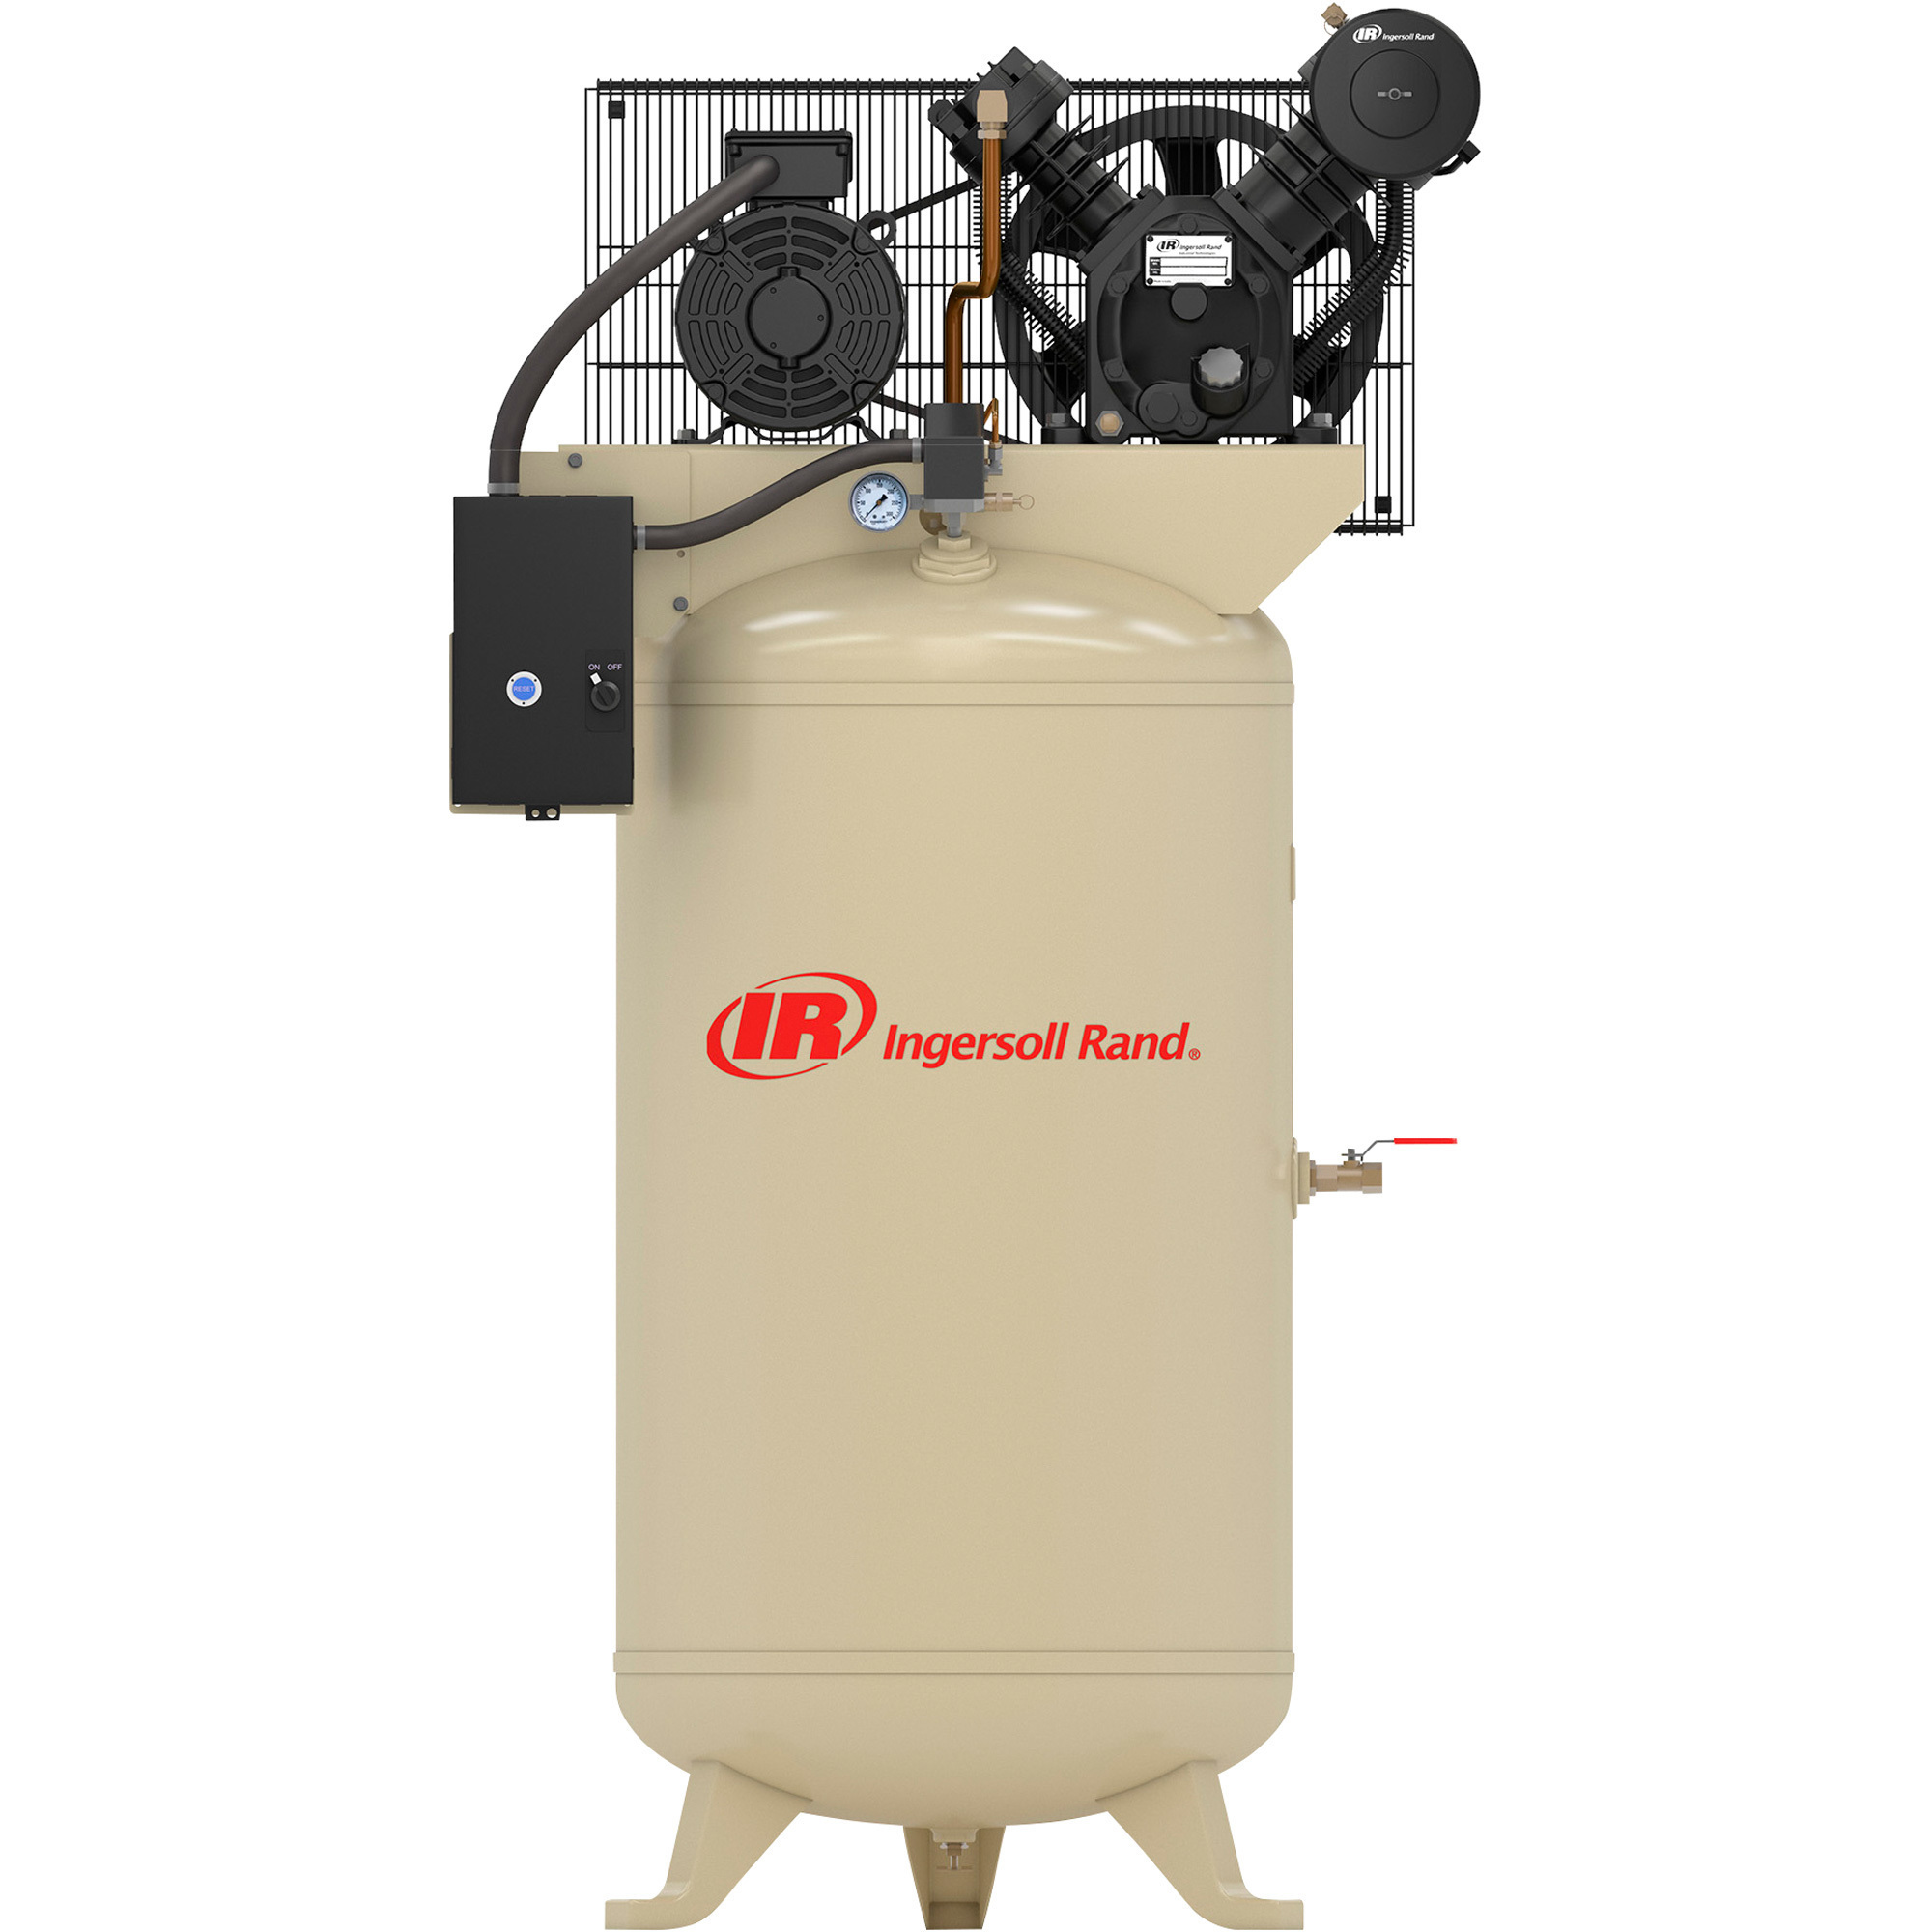 Ingersoll Rand Type-30 Reciprocating Air Compressor, 5 HP, 230 Volt, 3 Phase, 80 Gallon, Model 2340N5-V